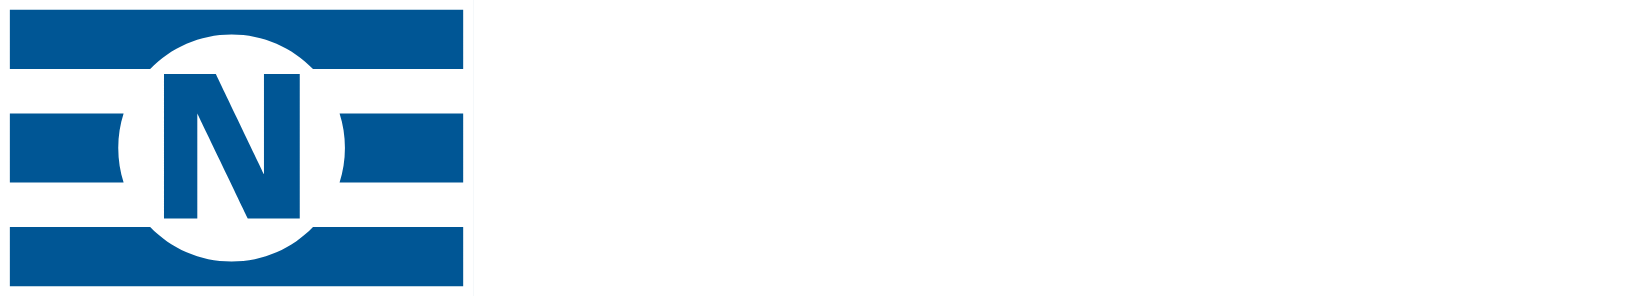 Navios Maritime Partners Logo groß für dunkle Hintergründe (transparentes PNG)